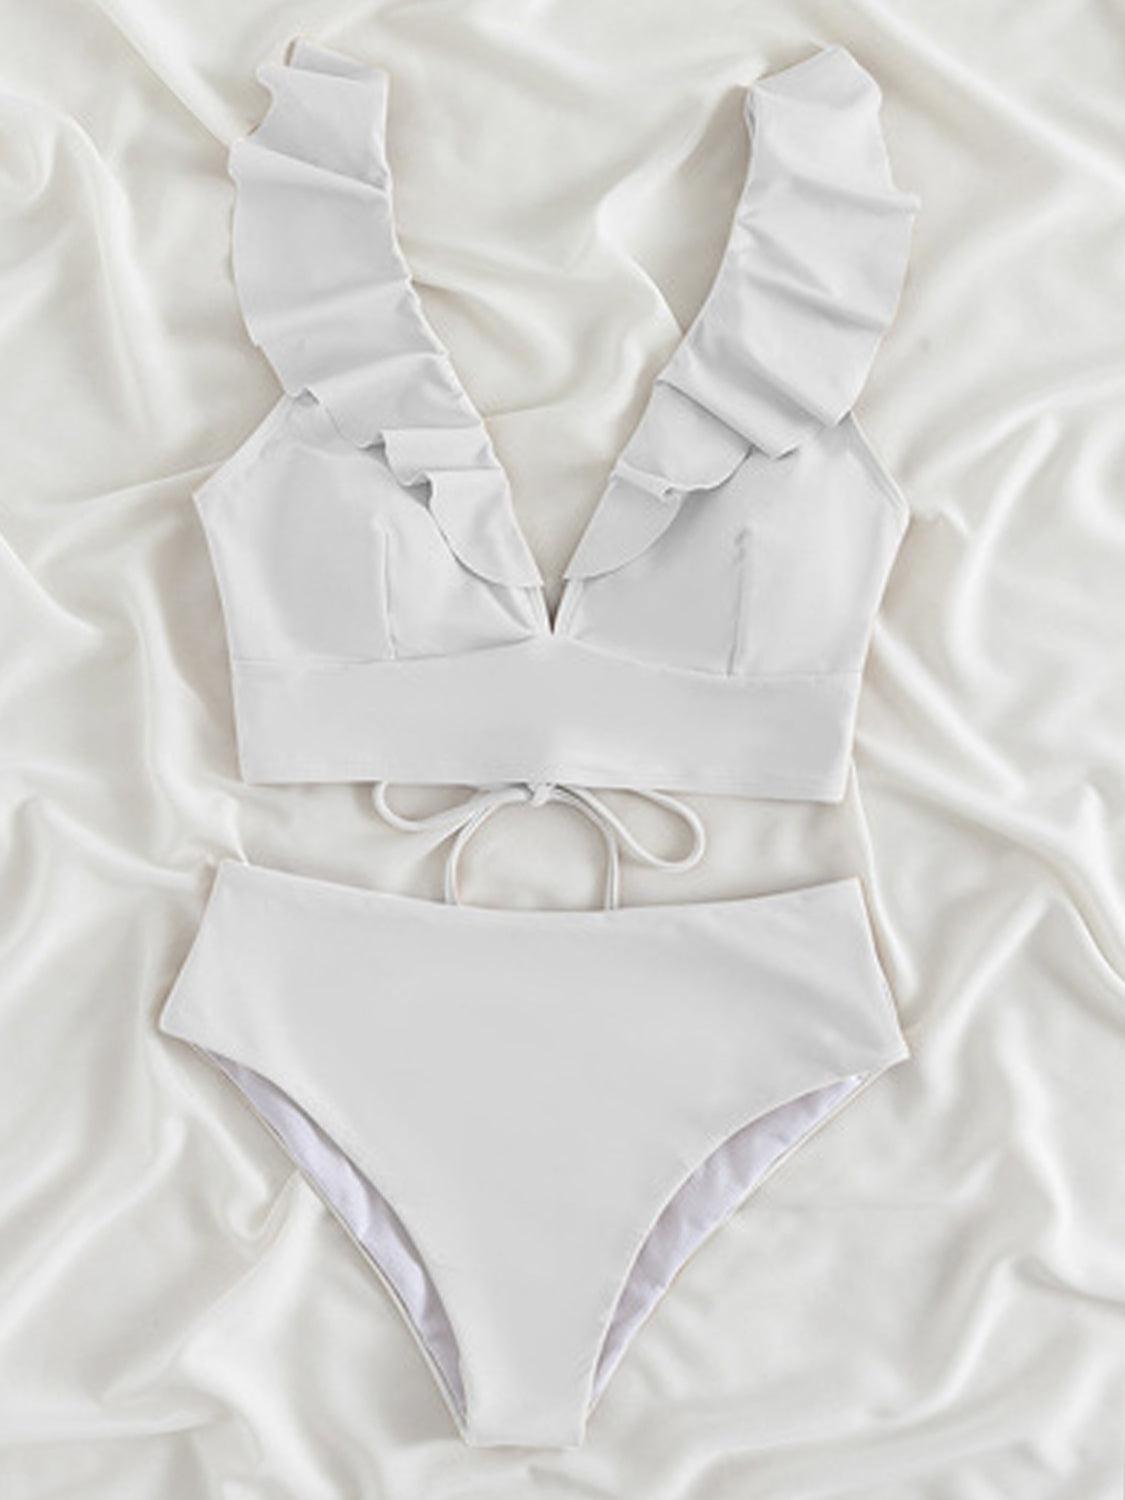 a white bikini top and bottom on a bed